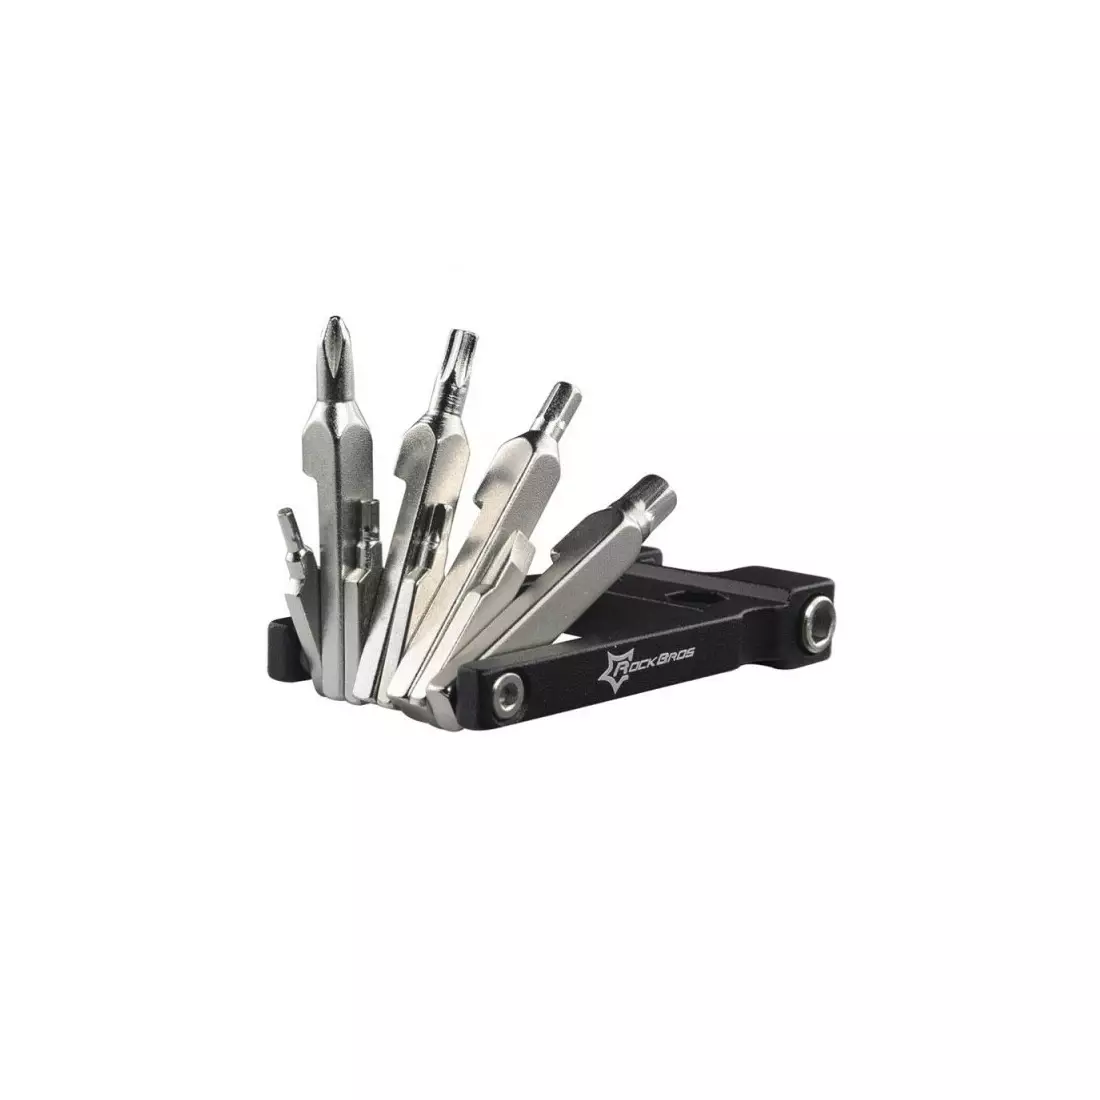 Rockbros  multifunction tool / wrench GJ8060